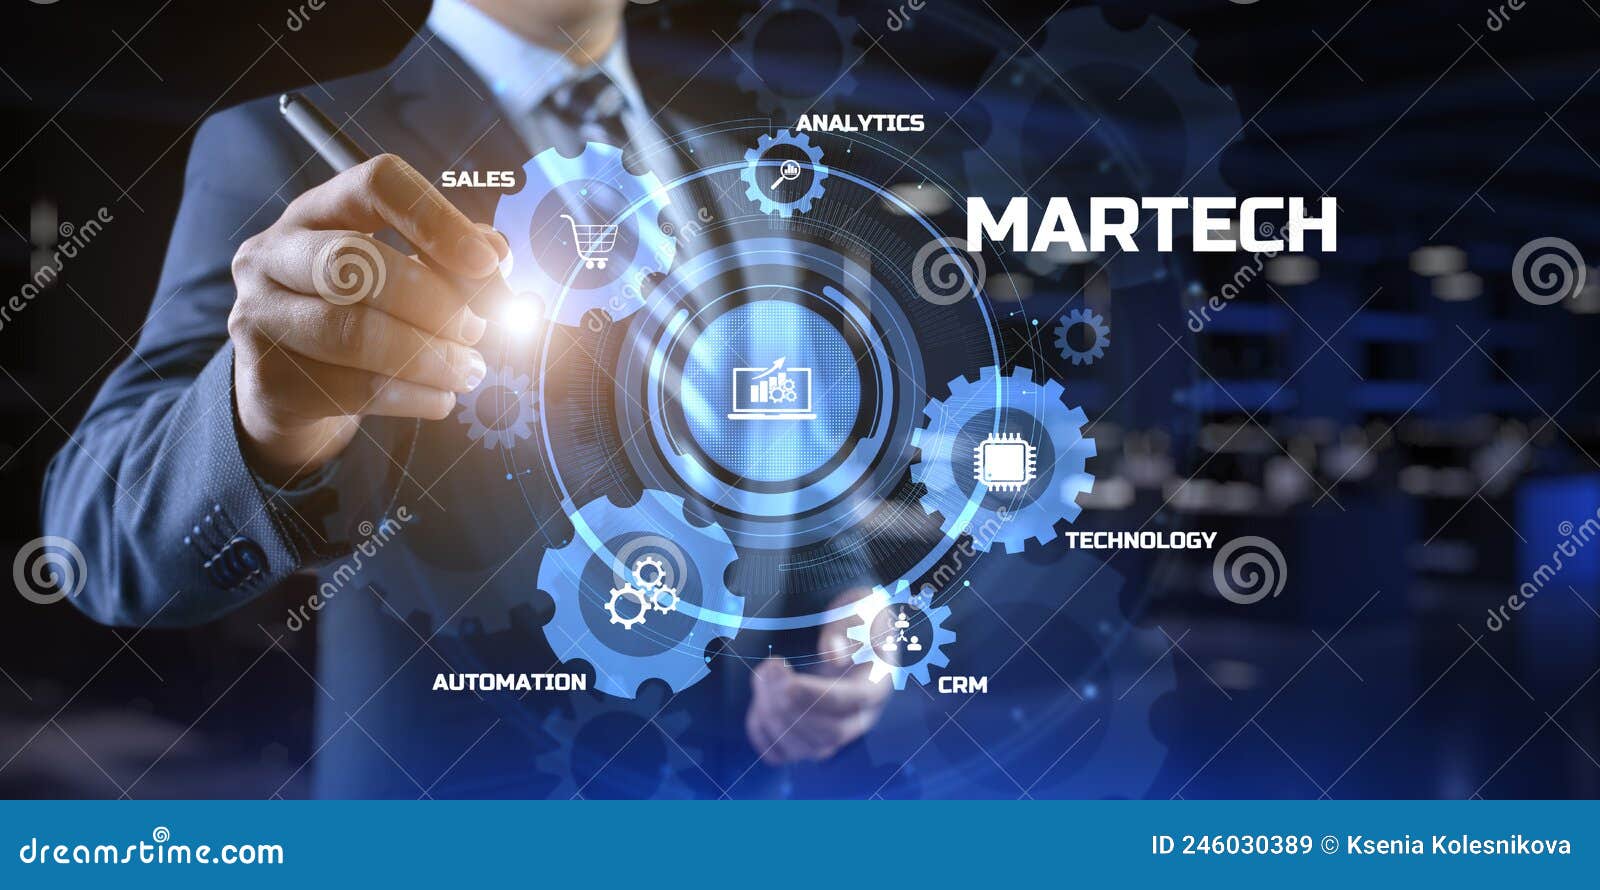 martech marketing technology concept on virtual screen interface